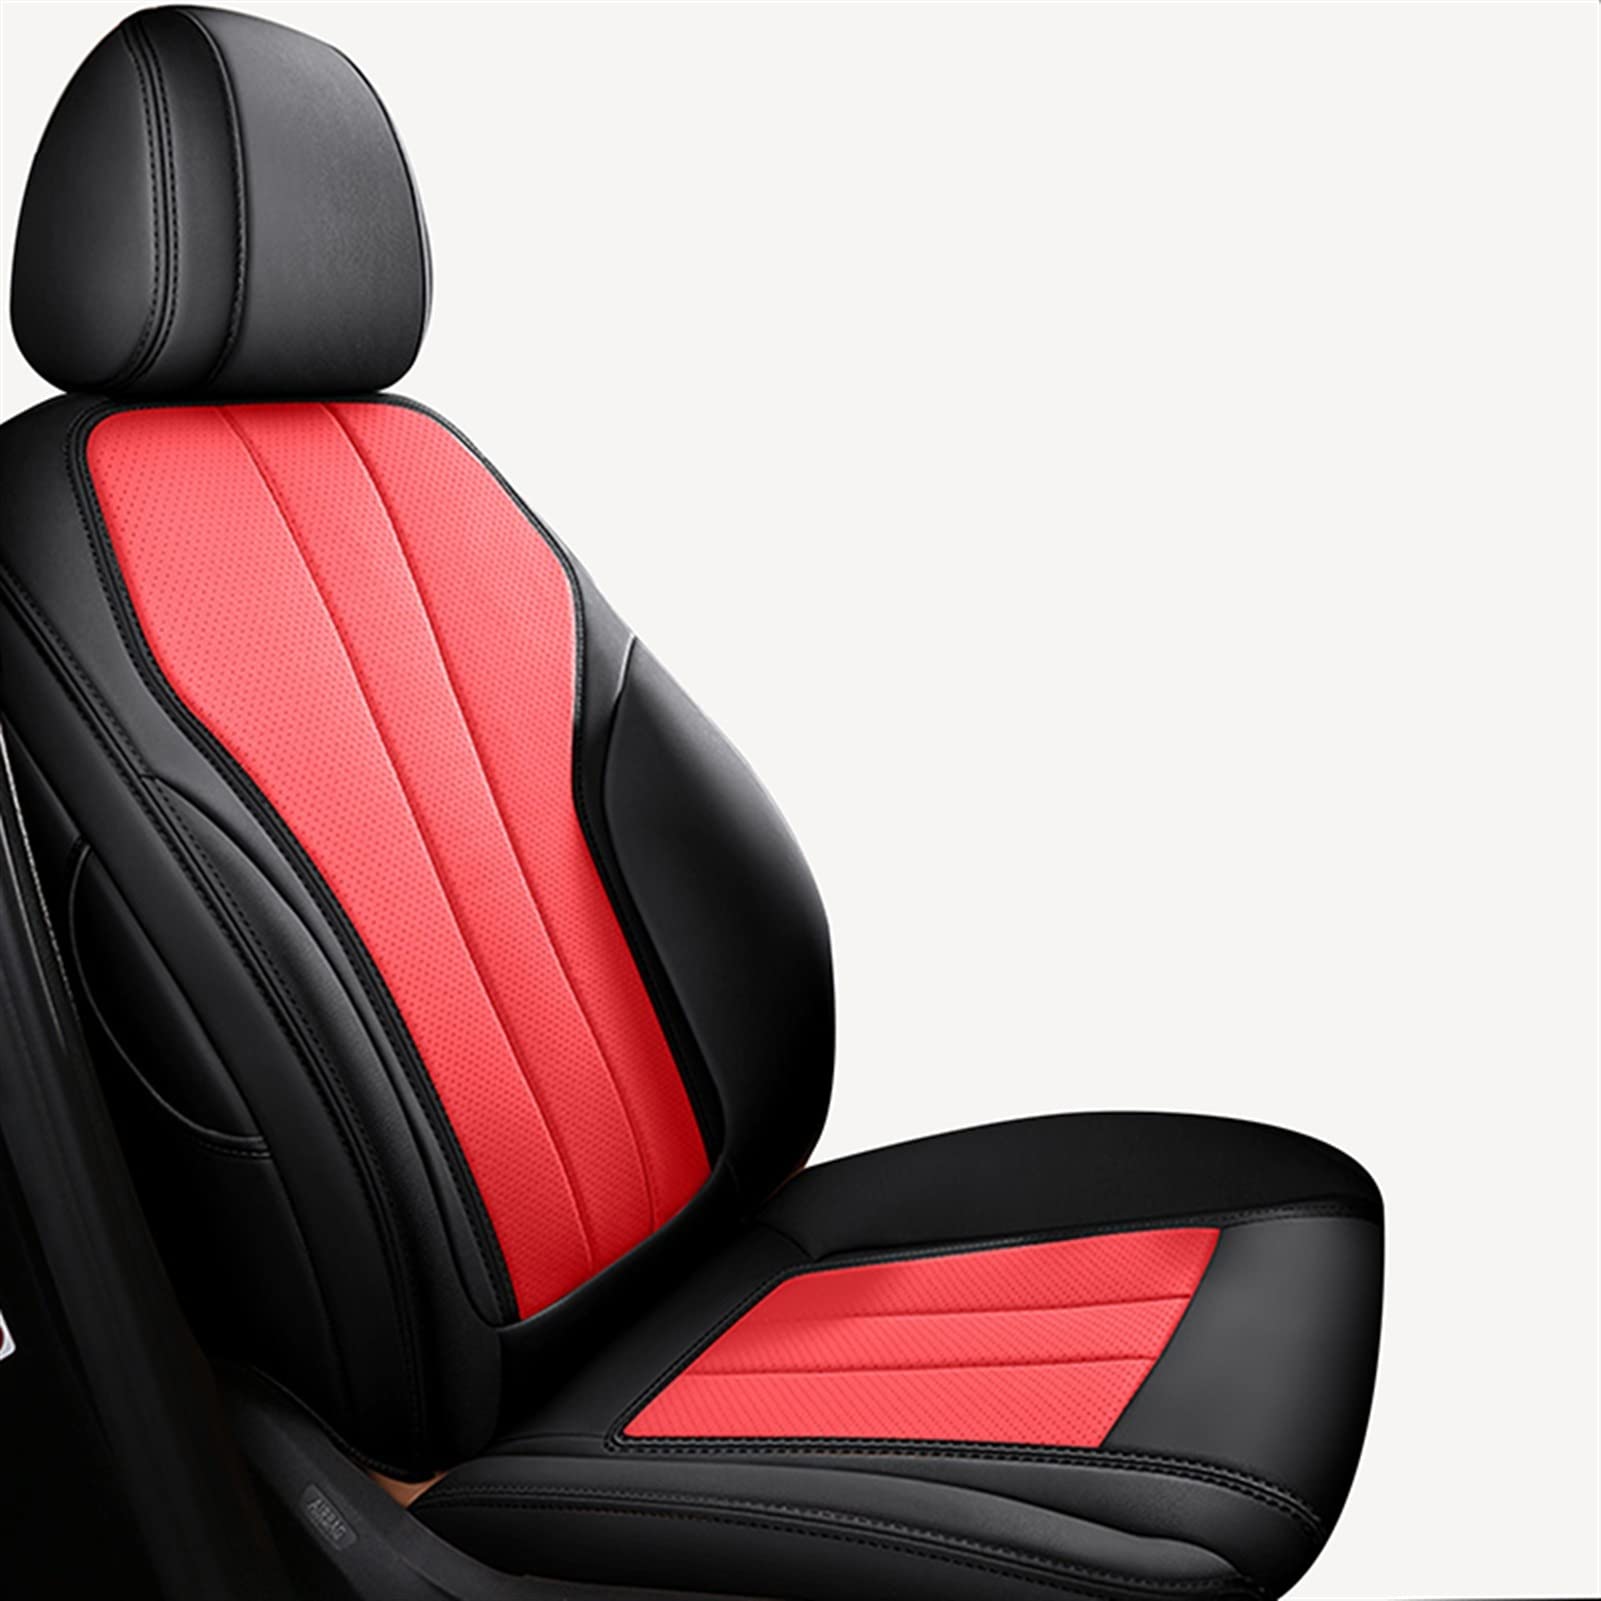 TATARENGS Automobilinnenraum Kompatibel Mit Ford Für Explorer 2020 2013 2014 2016 2017 Auto-Innenraum-Fahrersitzbezug Sitzbezug-Schutz(8) von TATARENGS